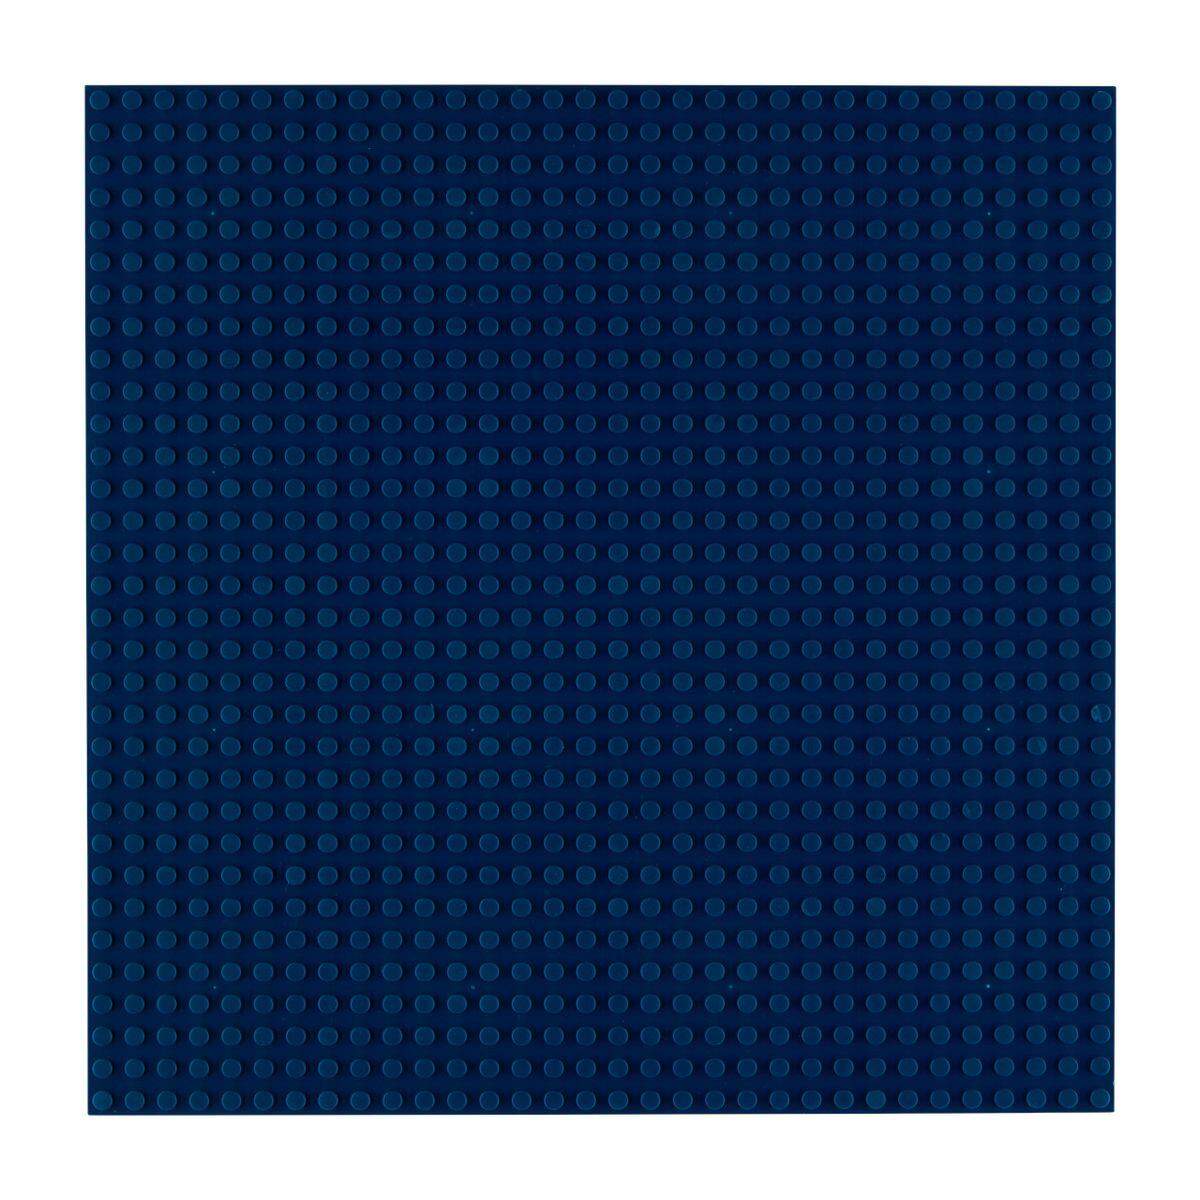 Open Bricks Baseplate 32x32 earth blue/dunkelblau